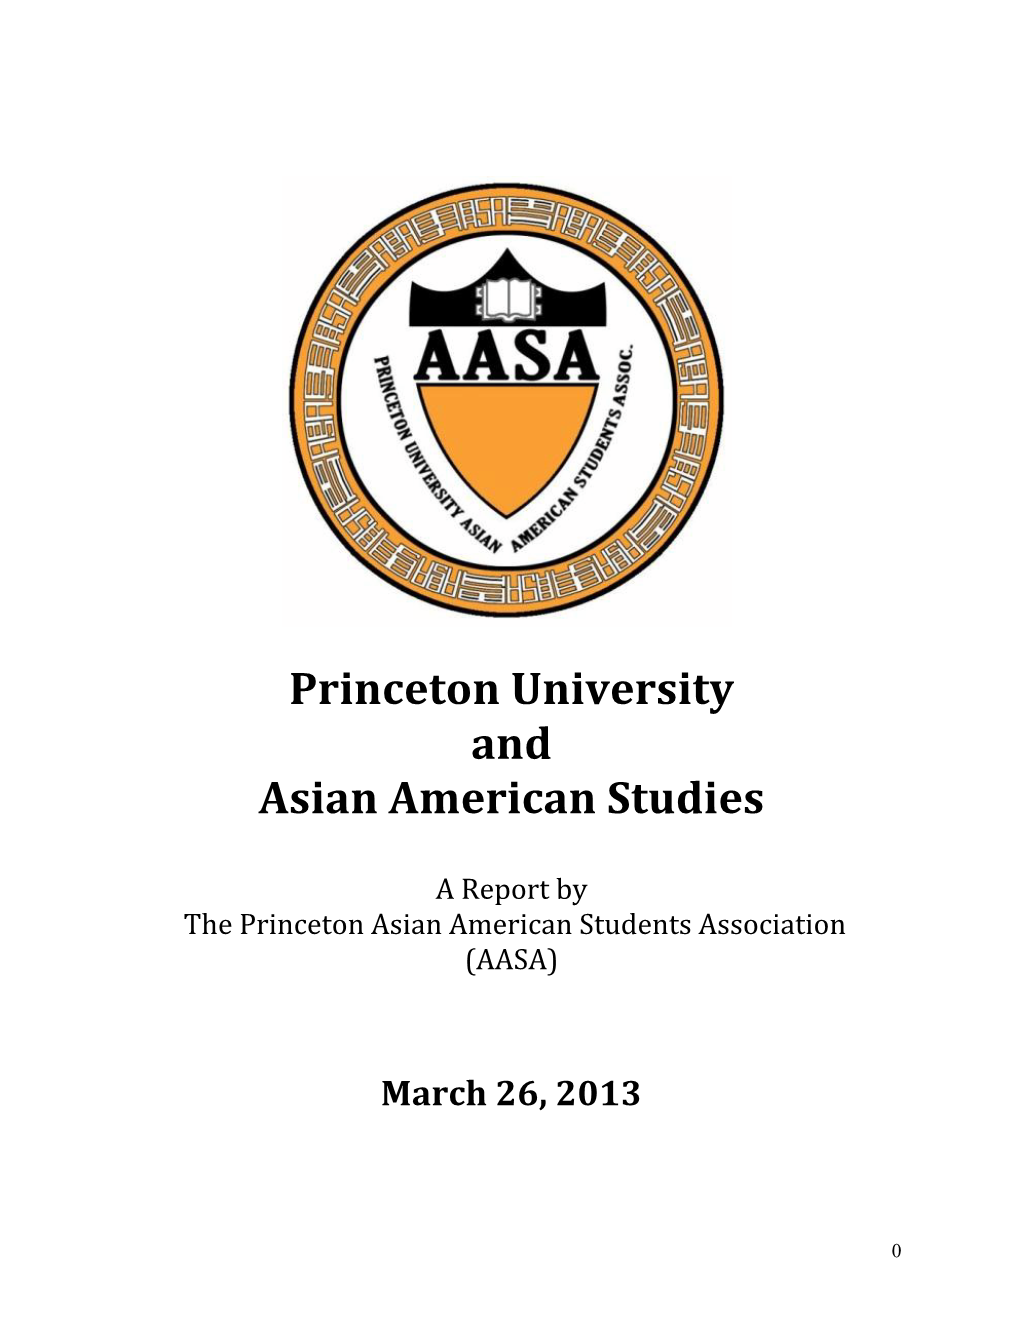 Princeton University and Asian American Studies